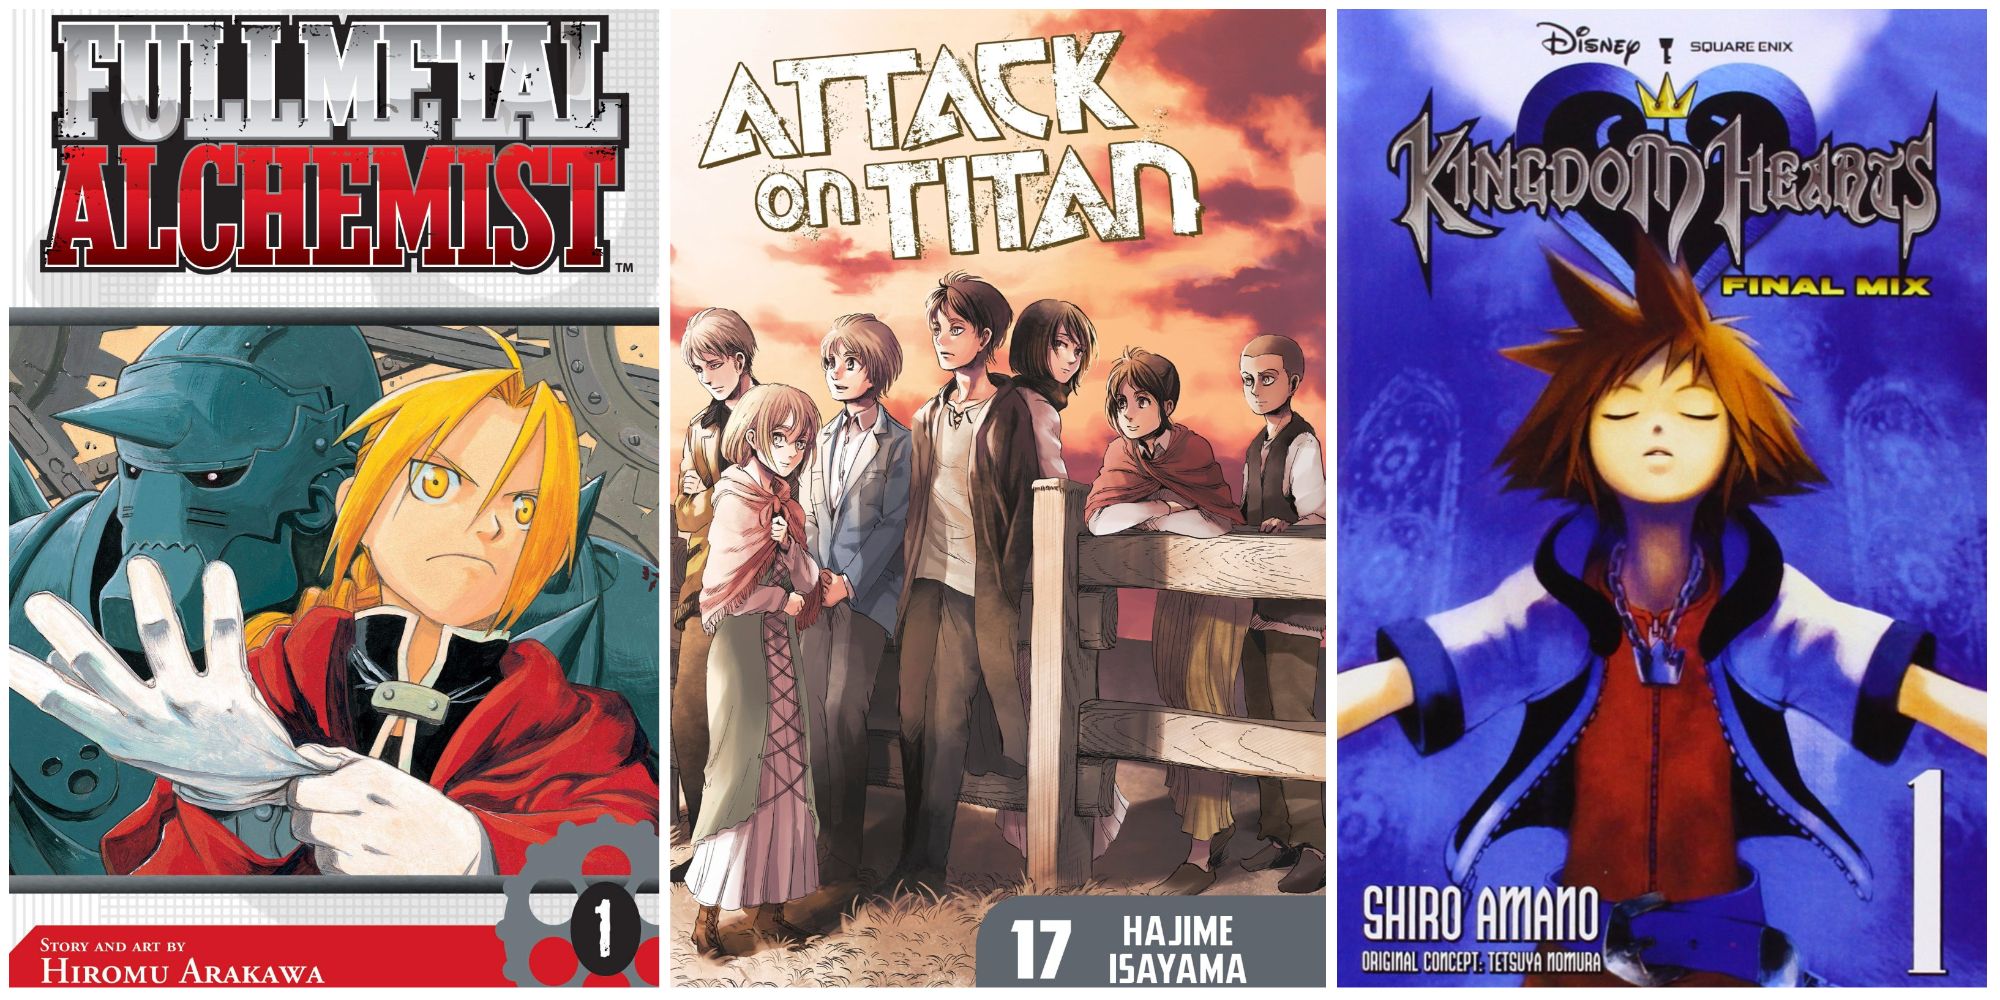 10 Best Manga For Final Fantasy Fans Fullmetal Alchemist Attack on Titan Kingdom Hearts